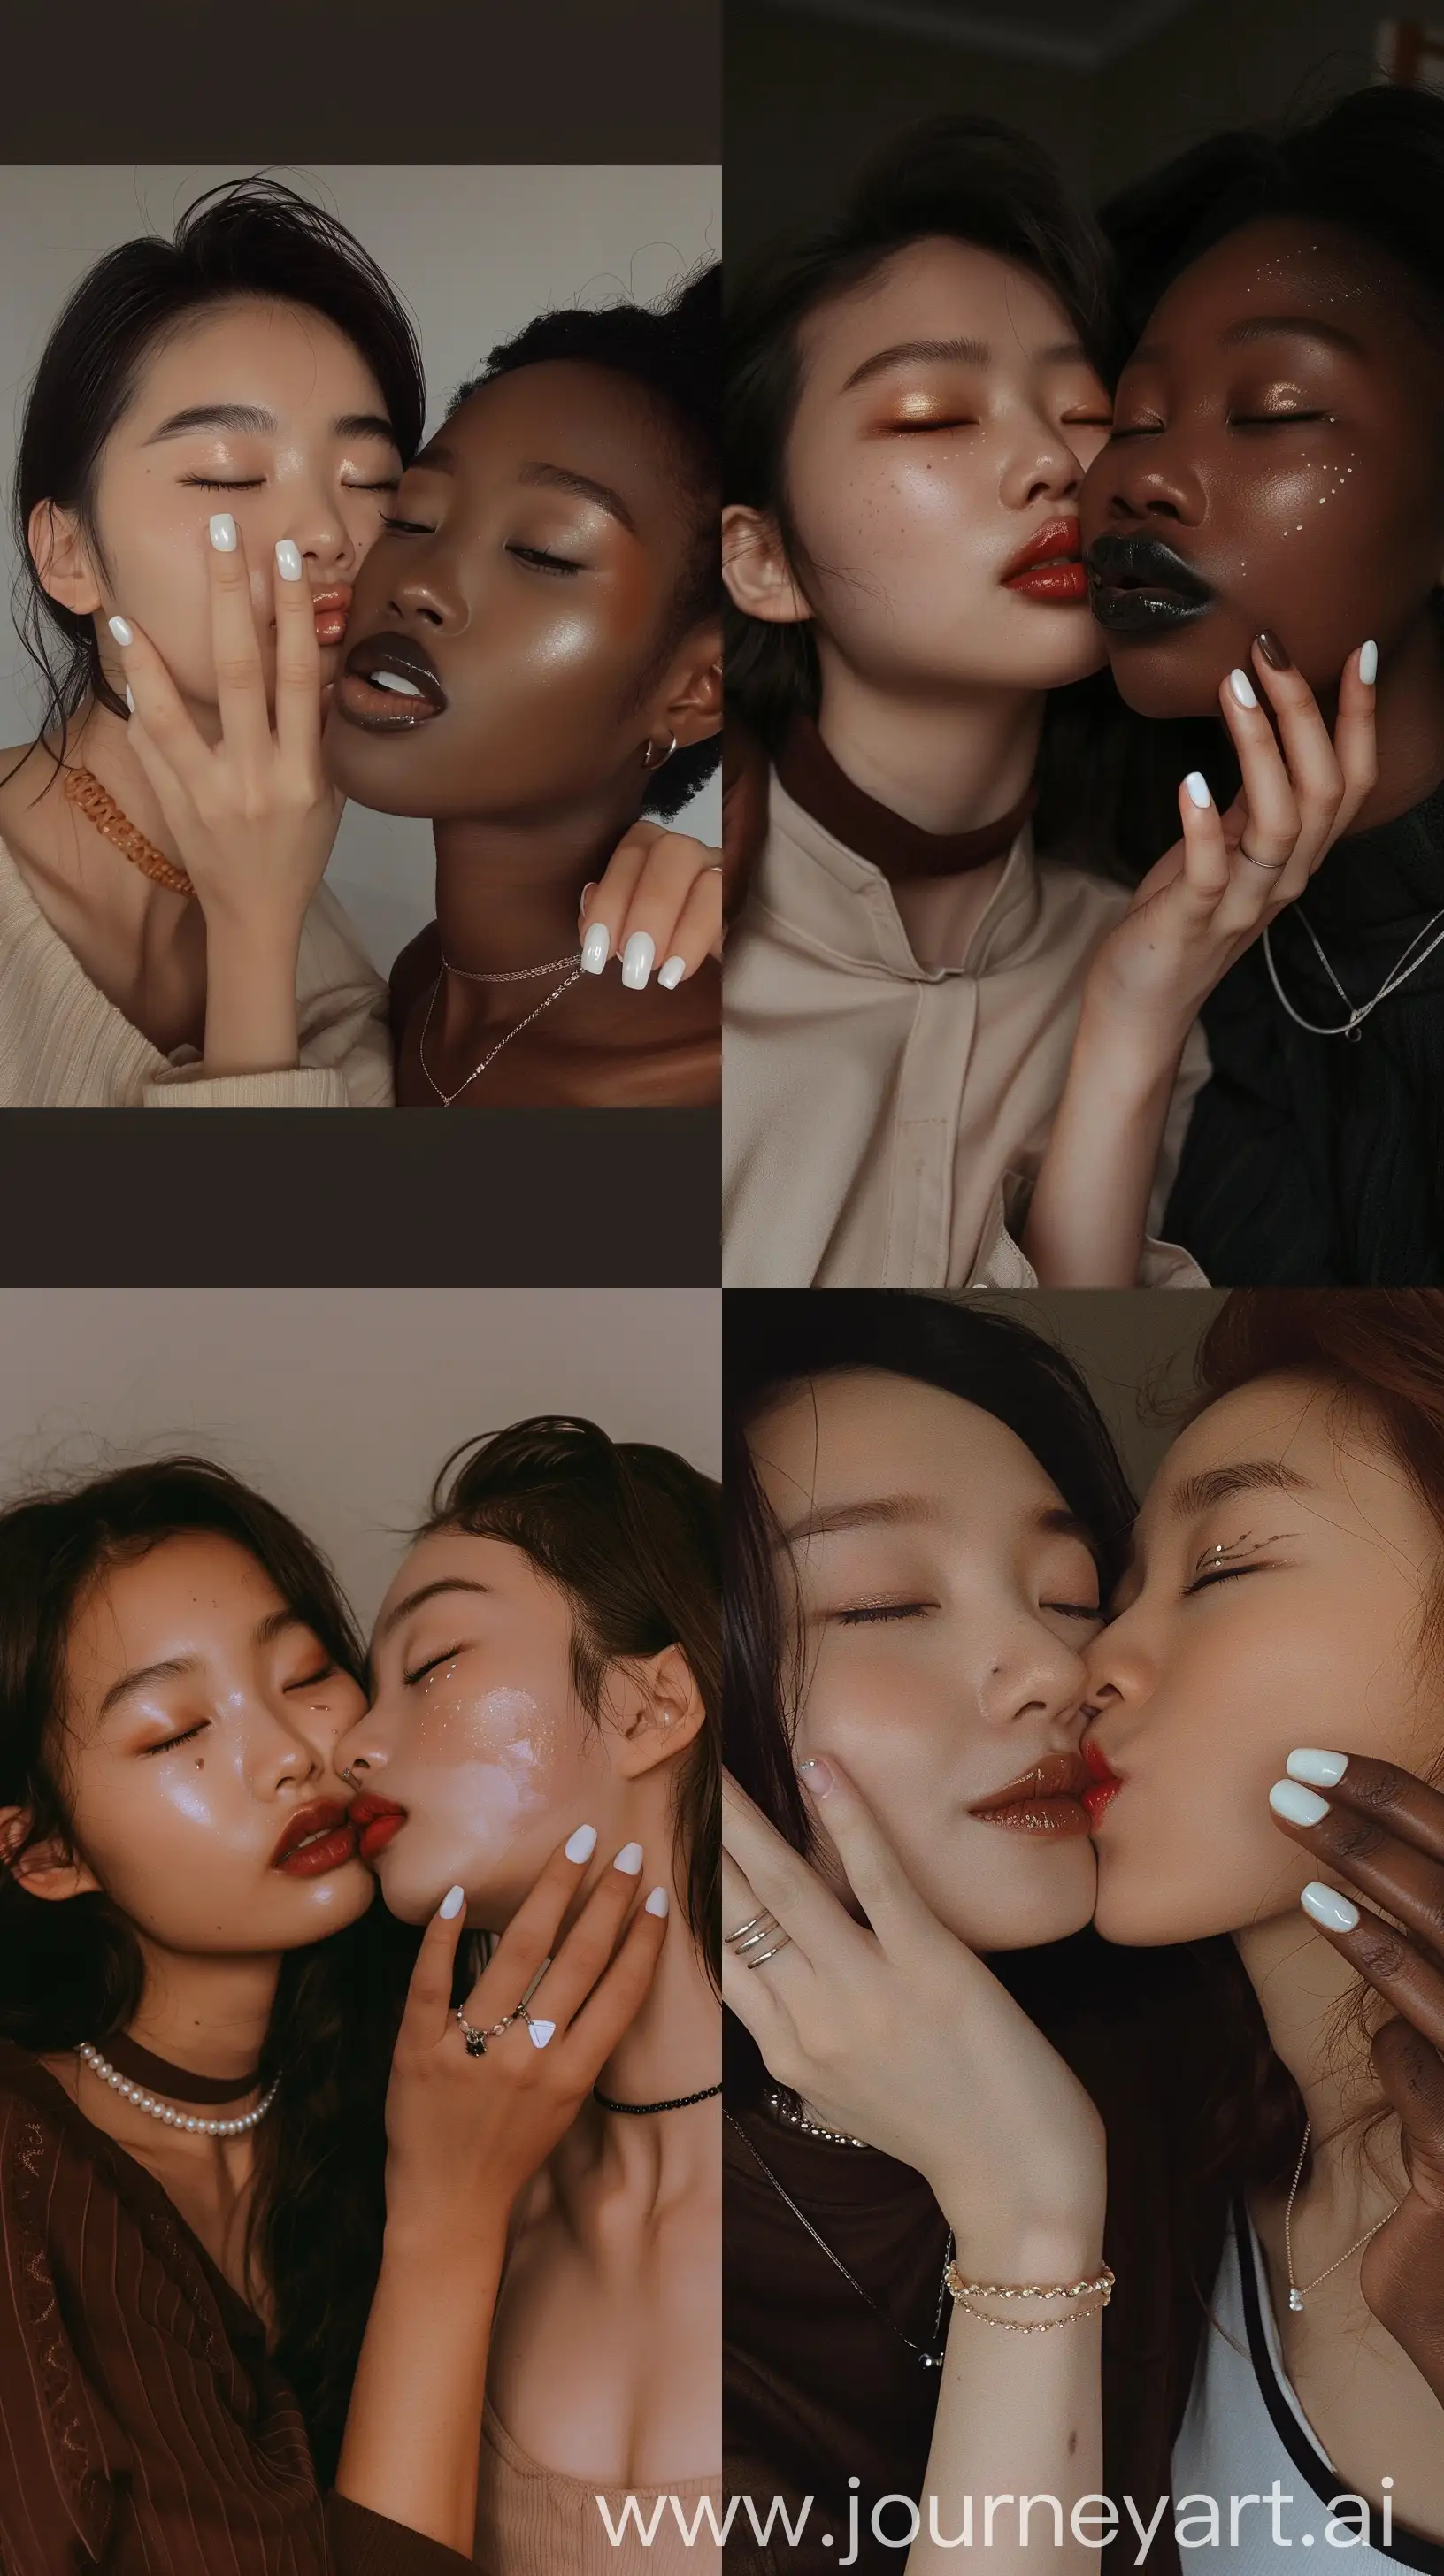 Affectionate-Teenage-Girls-Taking-Selfie-in-WarmToned-Aesthetic-Makeup